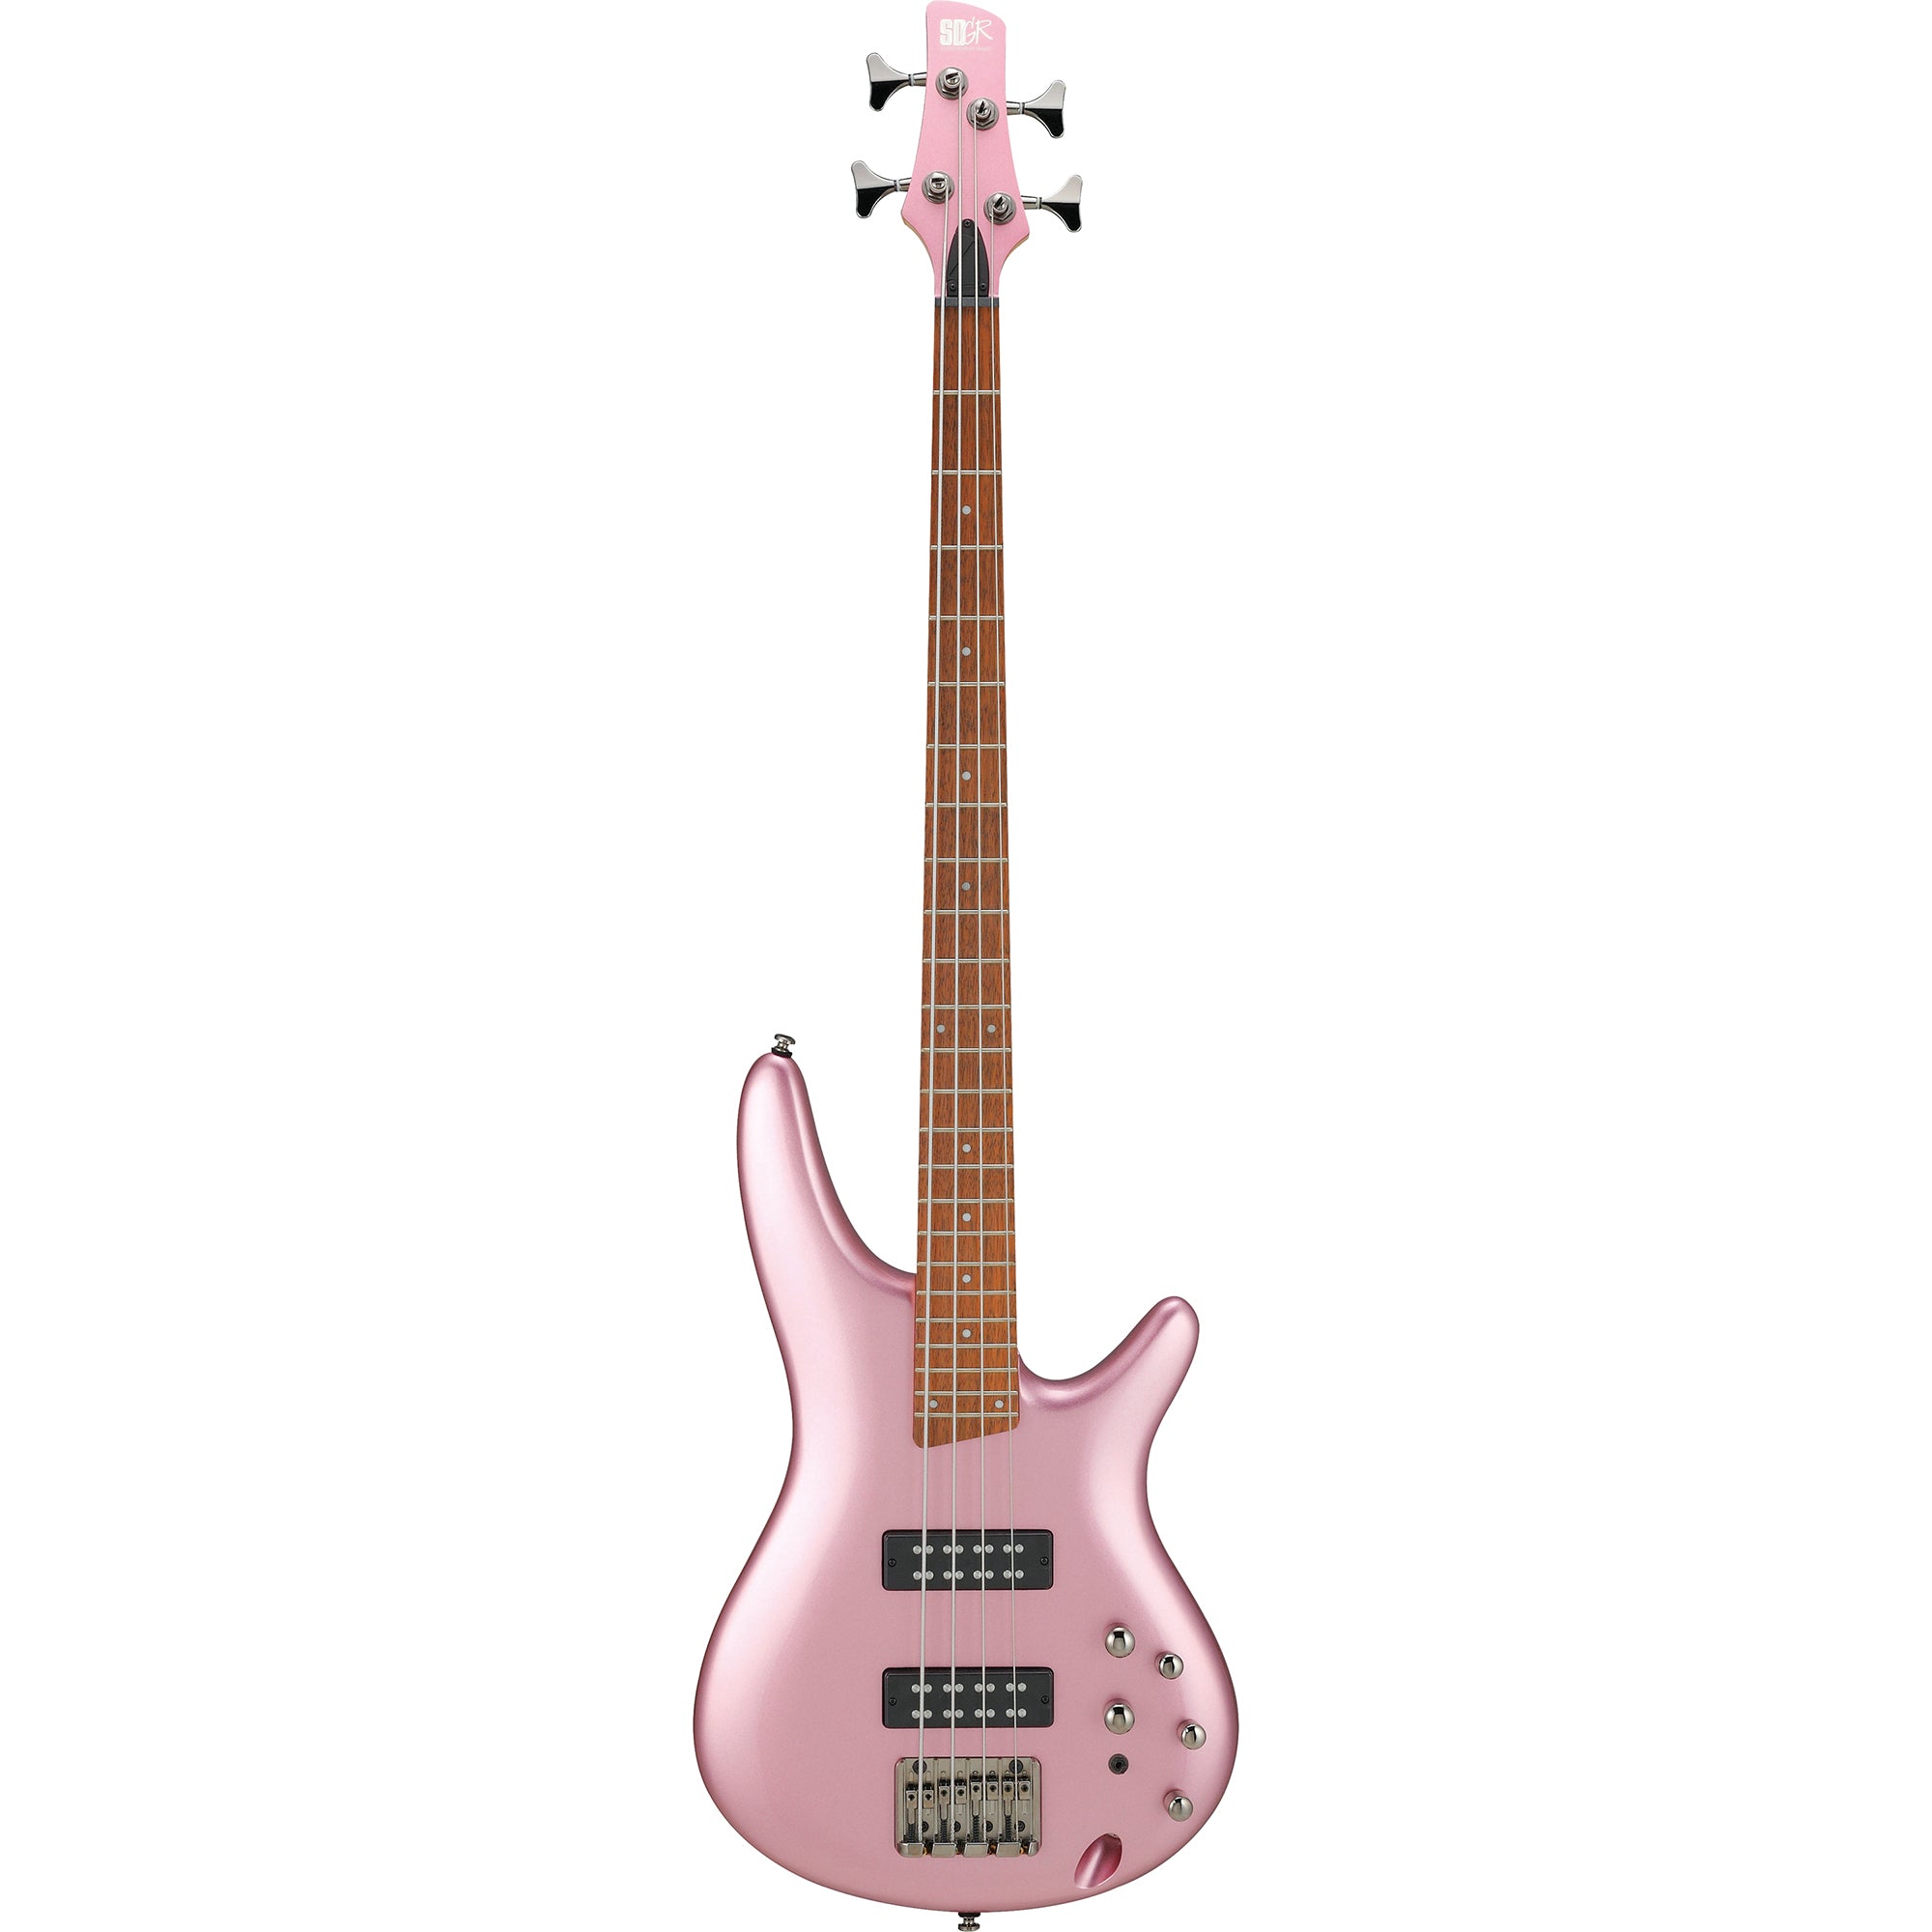 specificeren Muildier leeg Ibanez SR Standard 4 String Electric Bass Guitar, Pink Gold Metallic